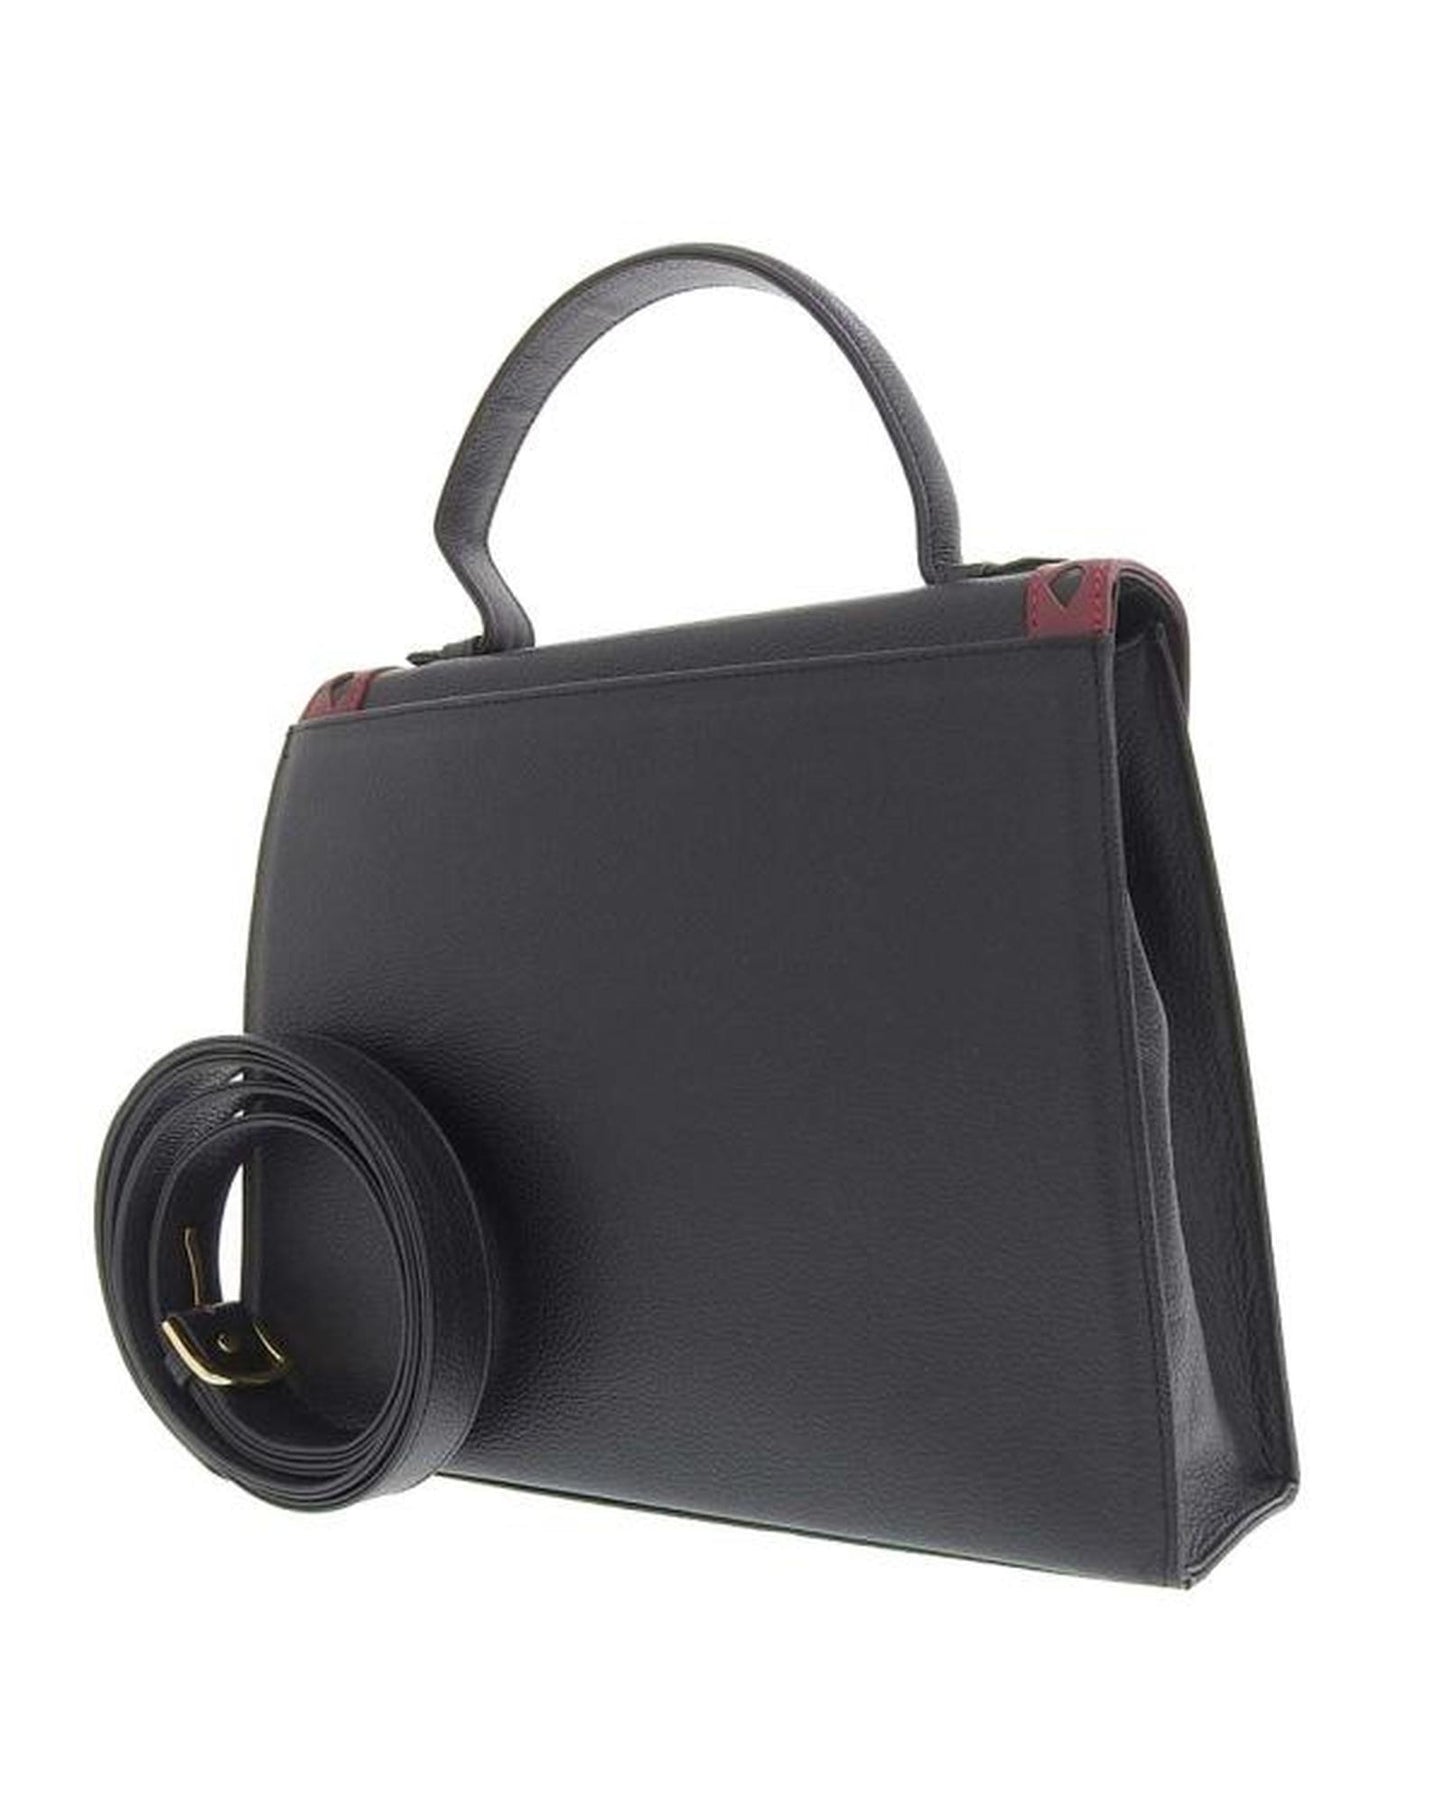 YSL Women's Black Leather Diamond Cut Handbag in Black